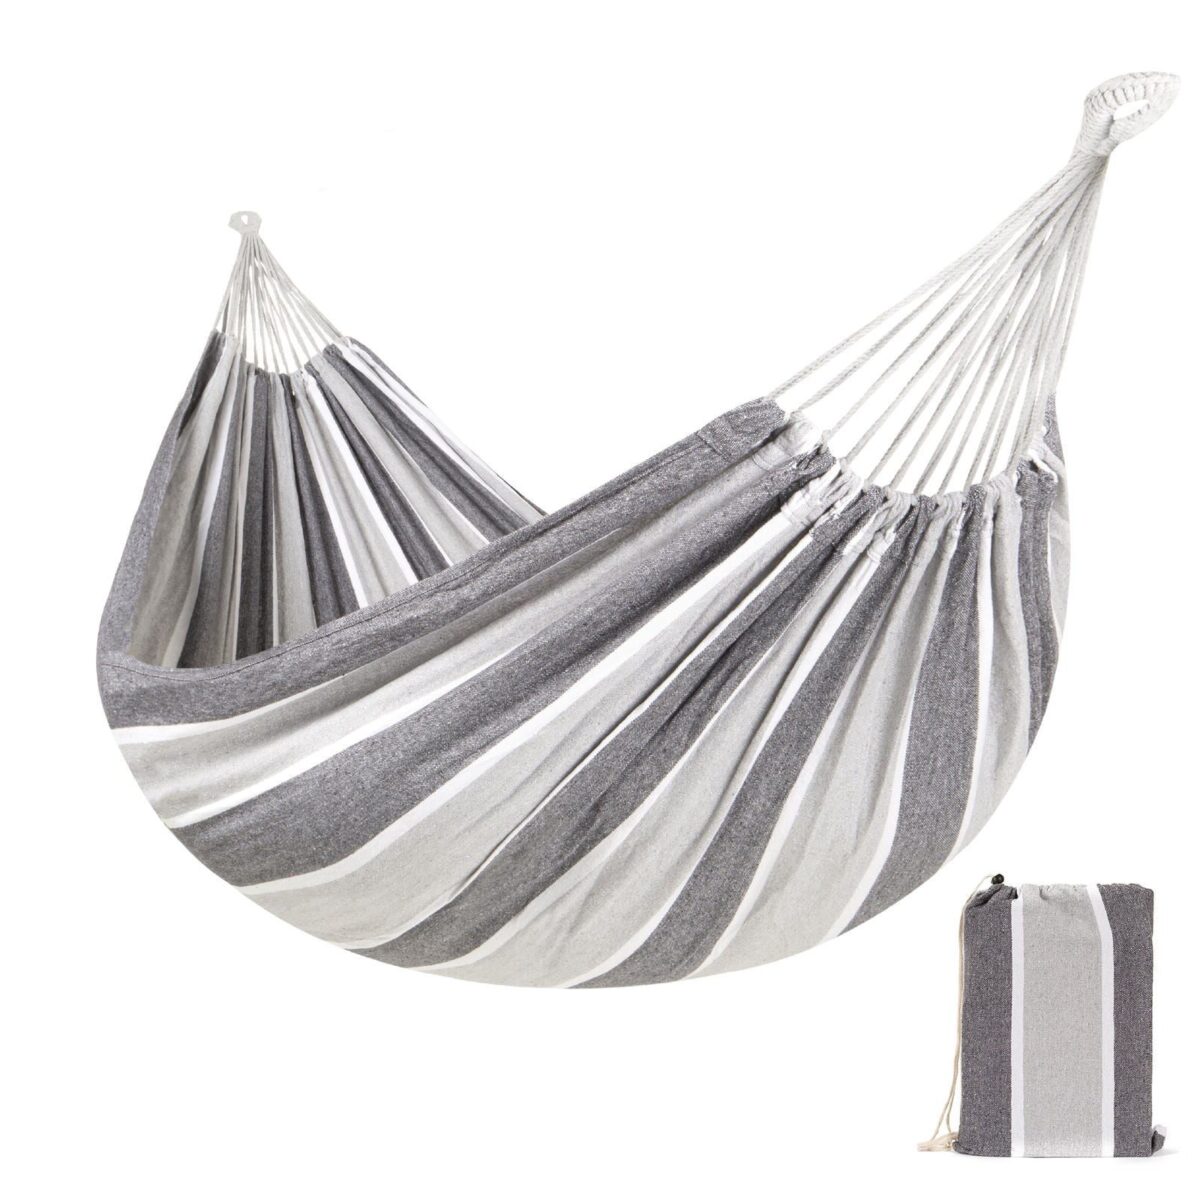 Ingalex cheap hammock